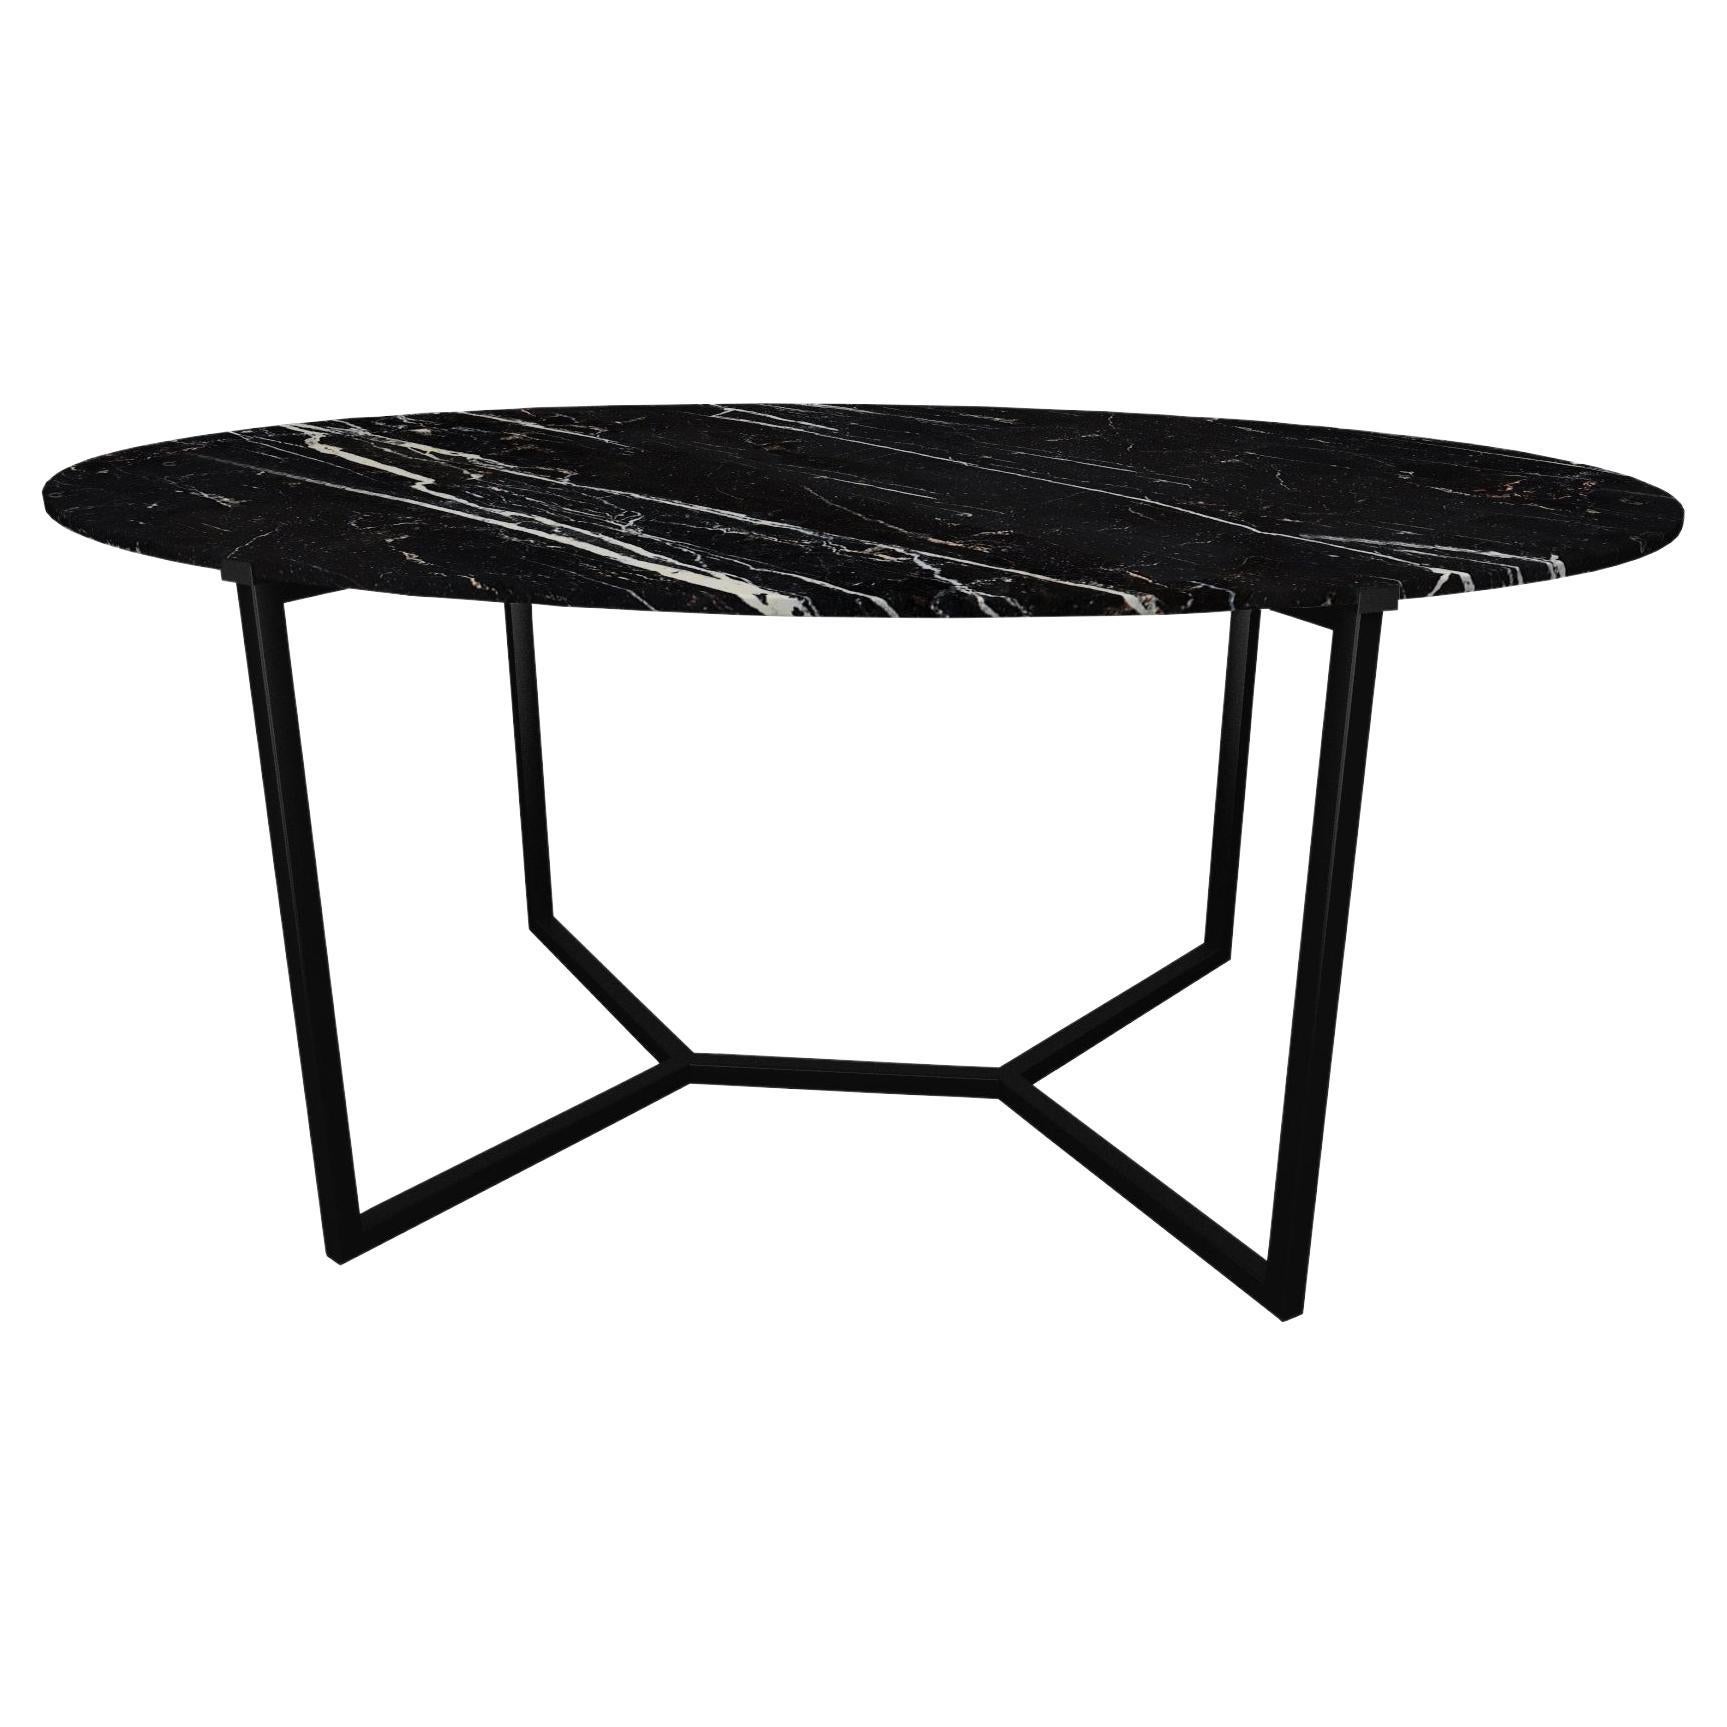 NORDST TEDDY Dining Table, Italian Black Eagle Marble, Danish Modern Design, New For Sale